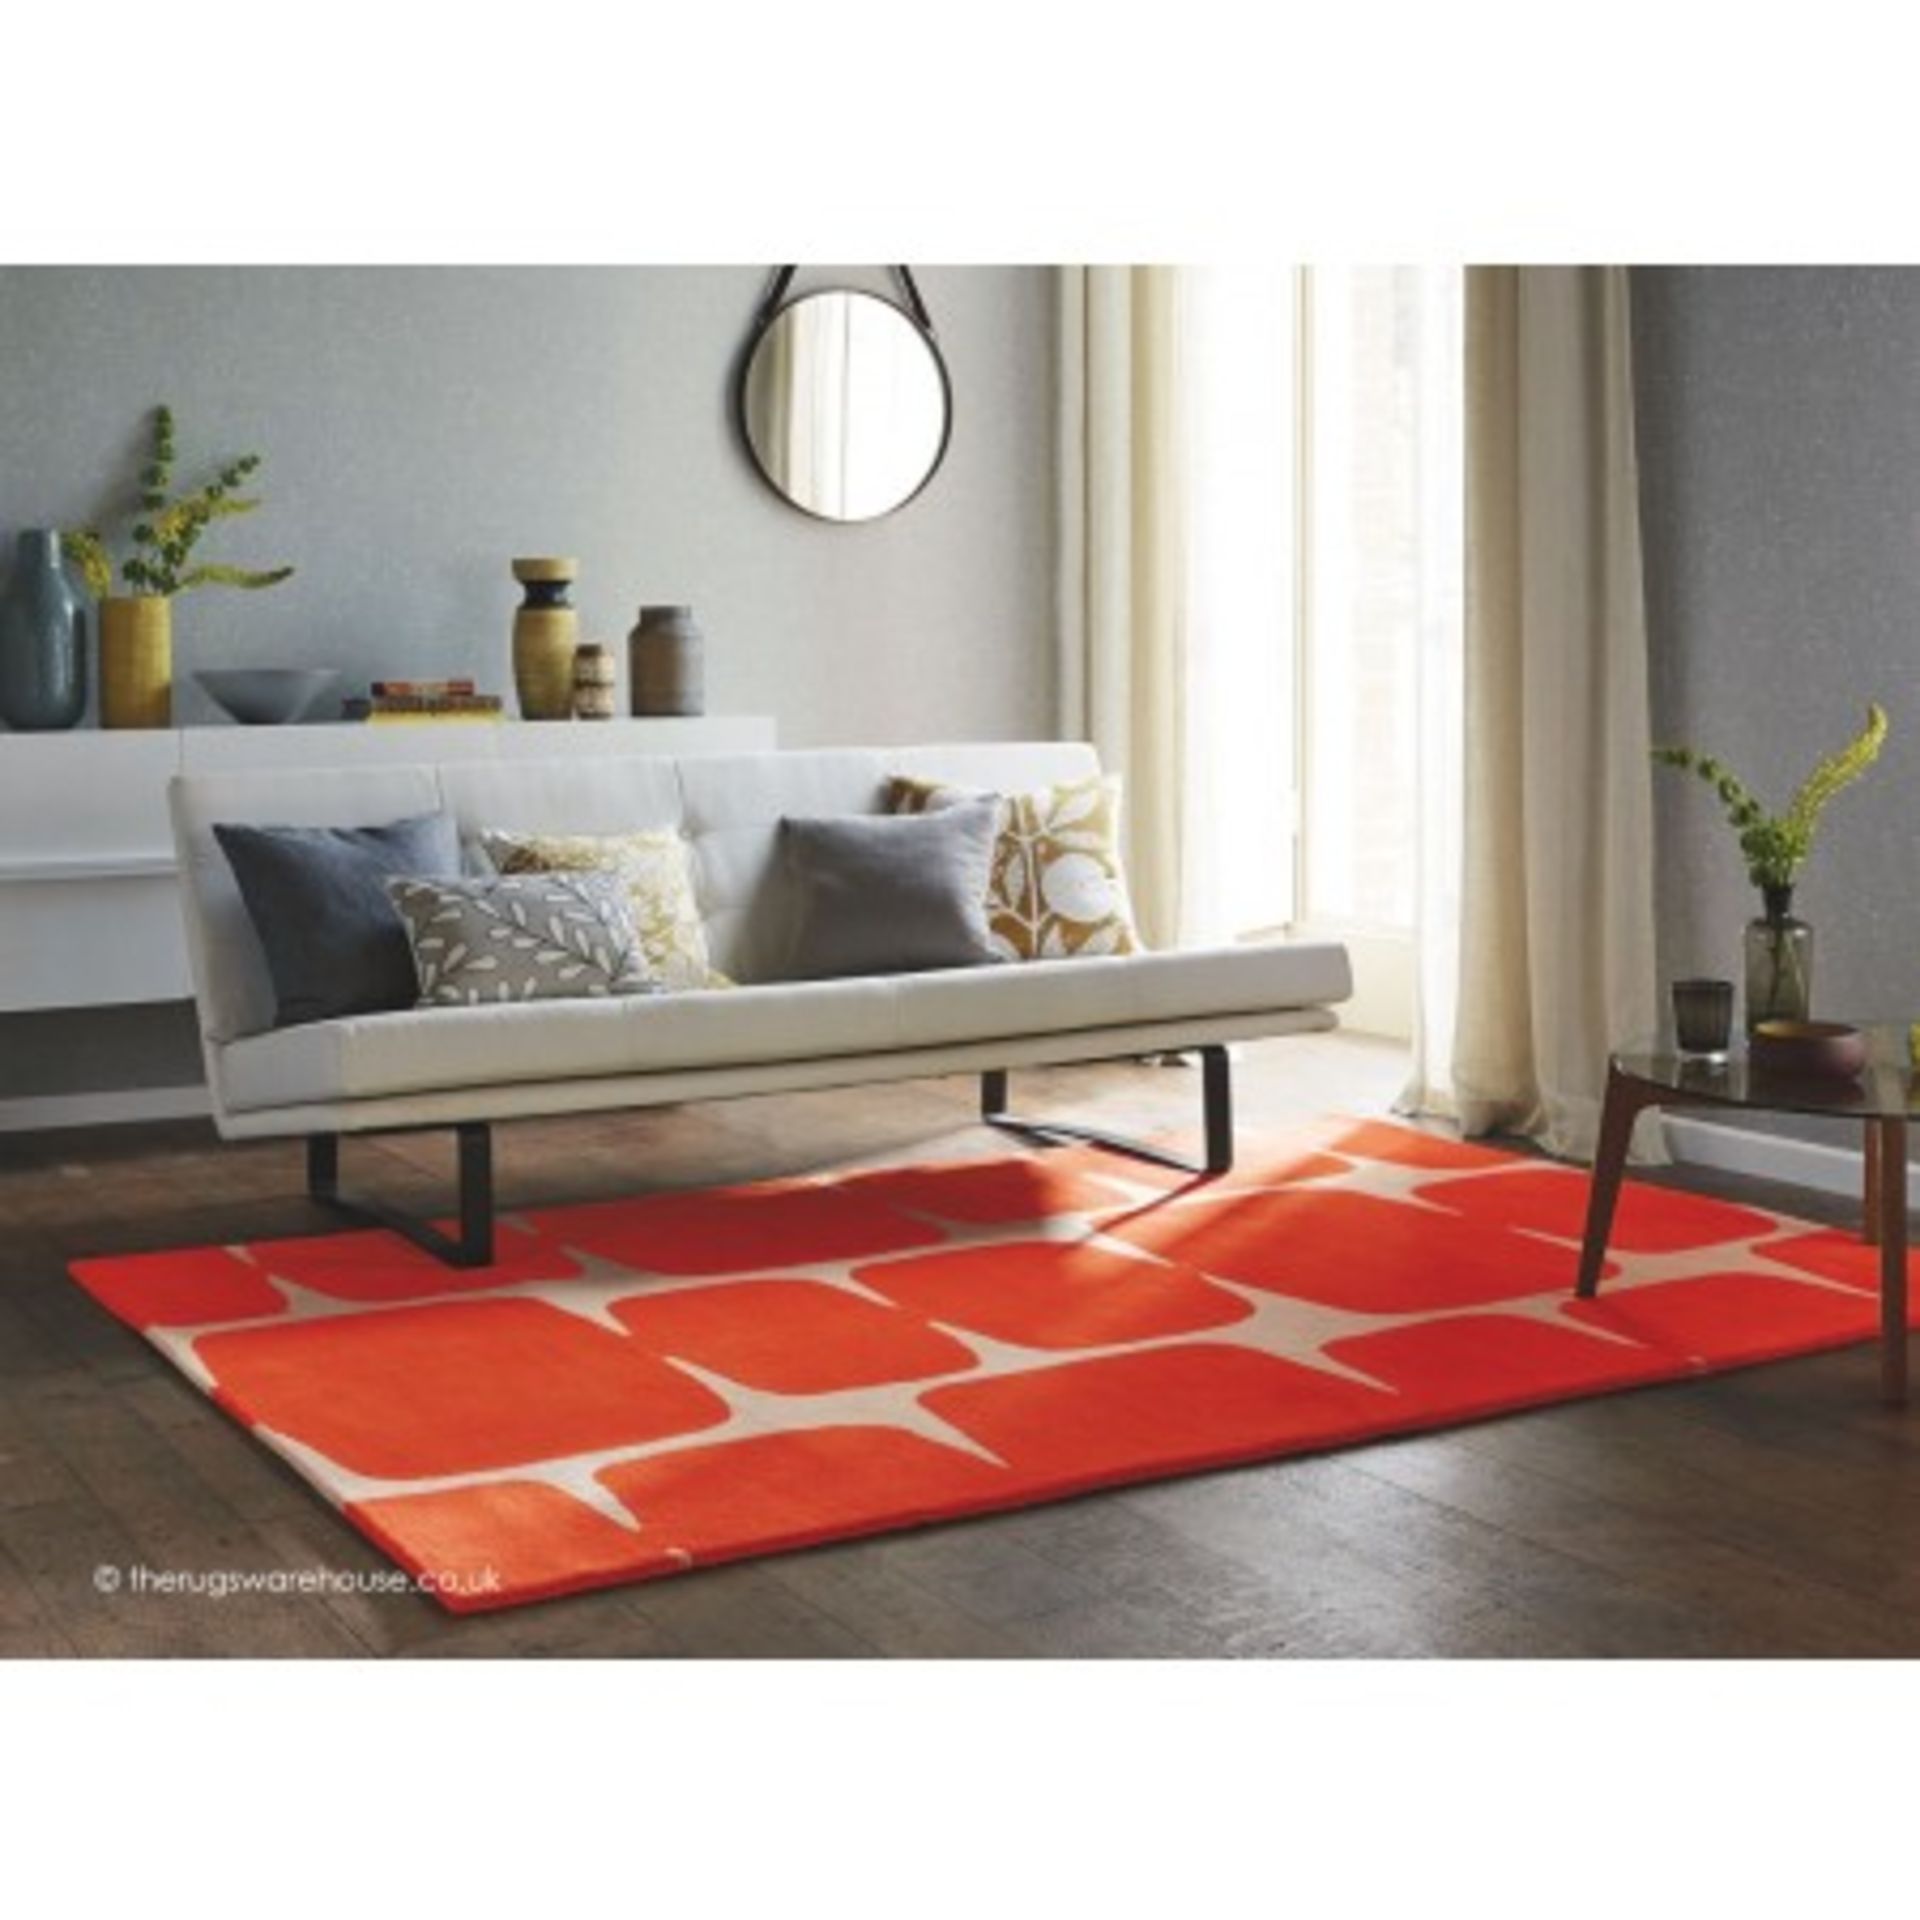 1 x Scion Lohko Poppy Designer Handmade Carpet Rug - Made From 100% Wool Yarn - 140 x 200 cms - Image 6 of 6